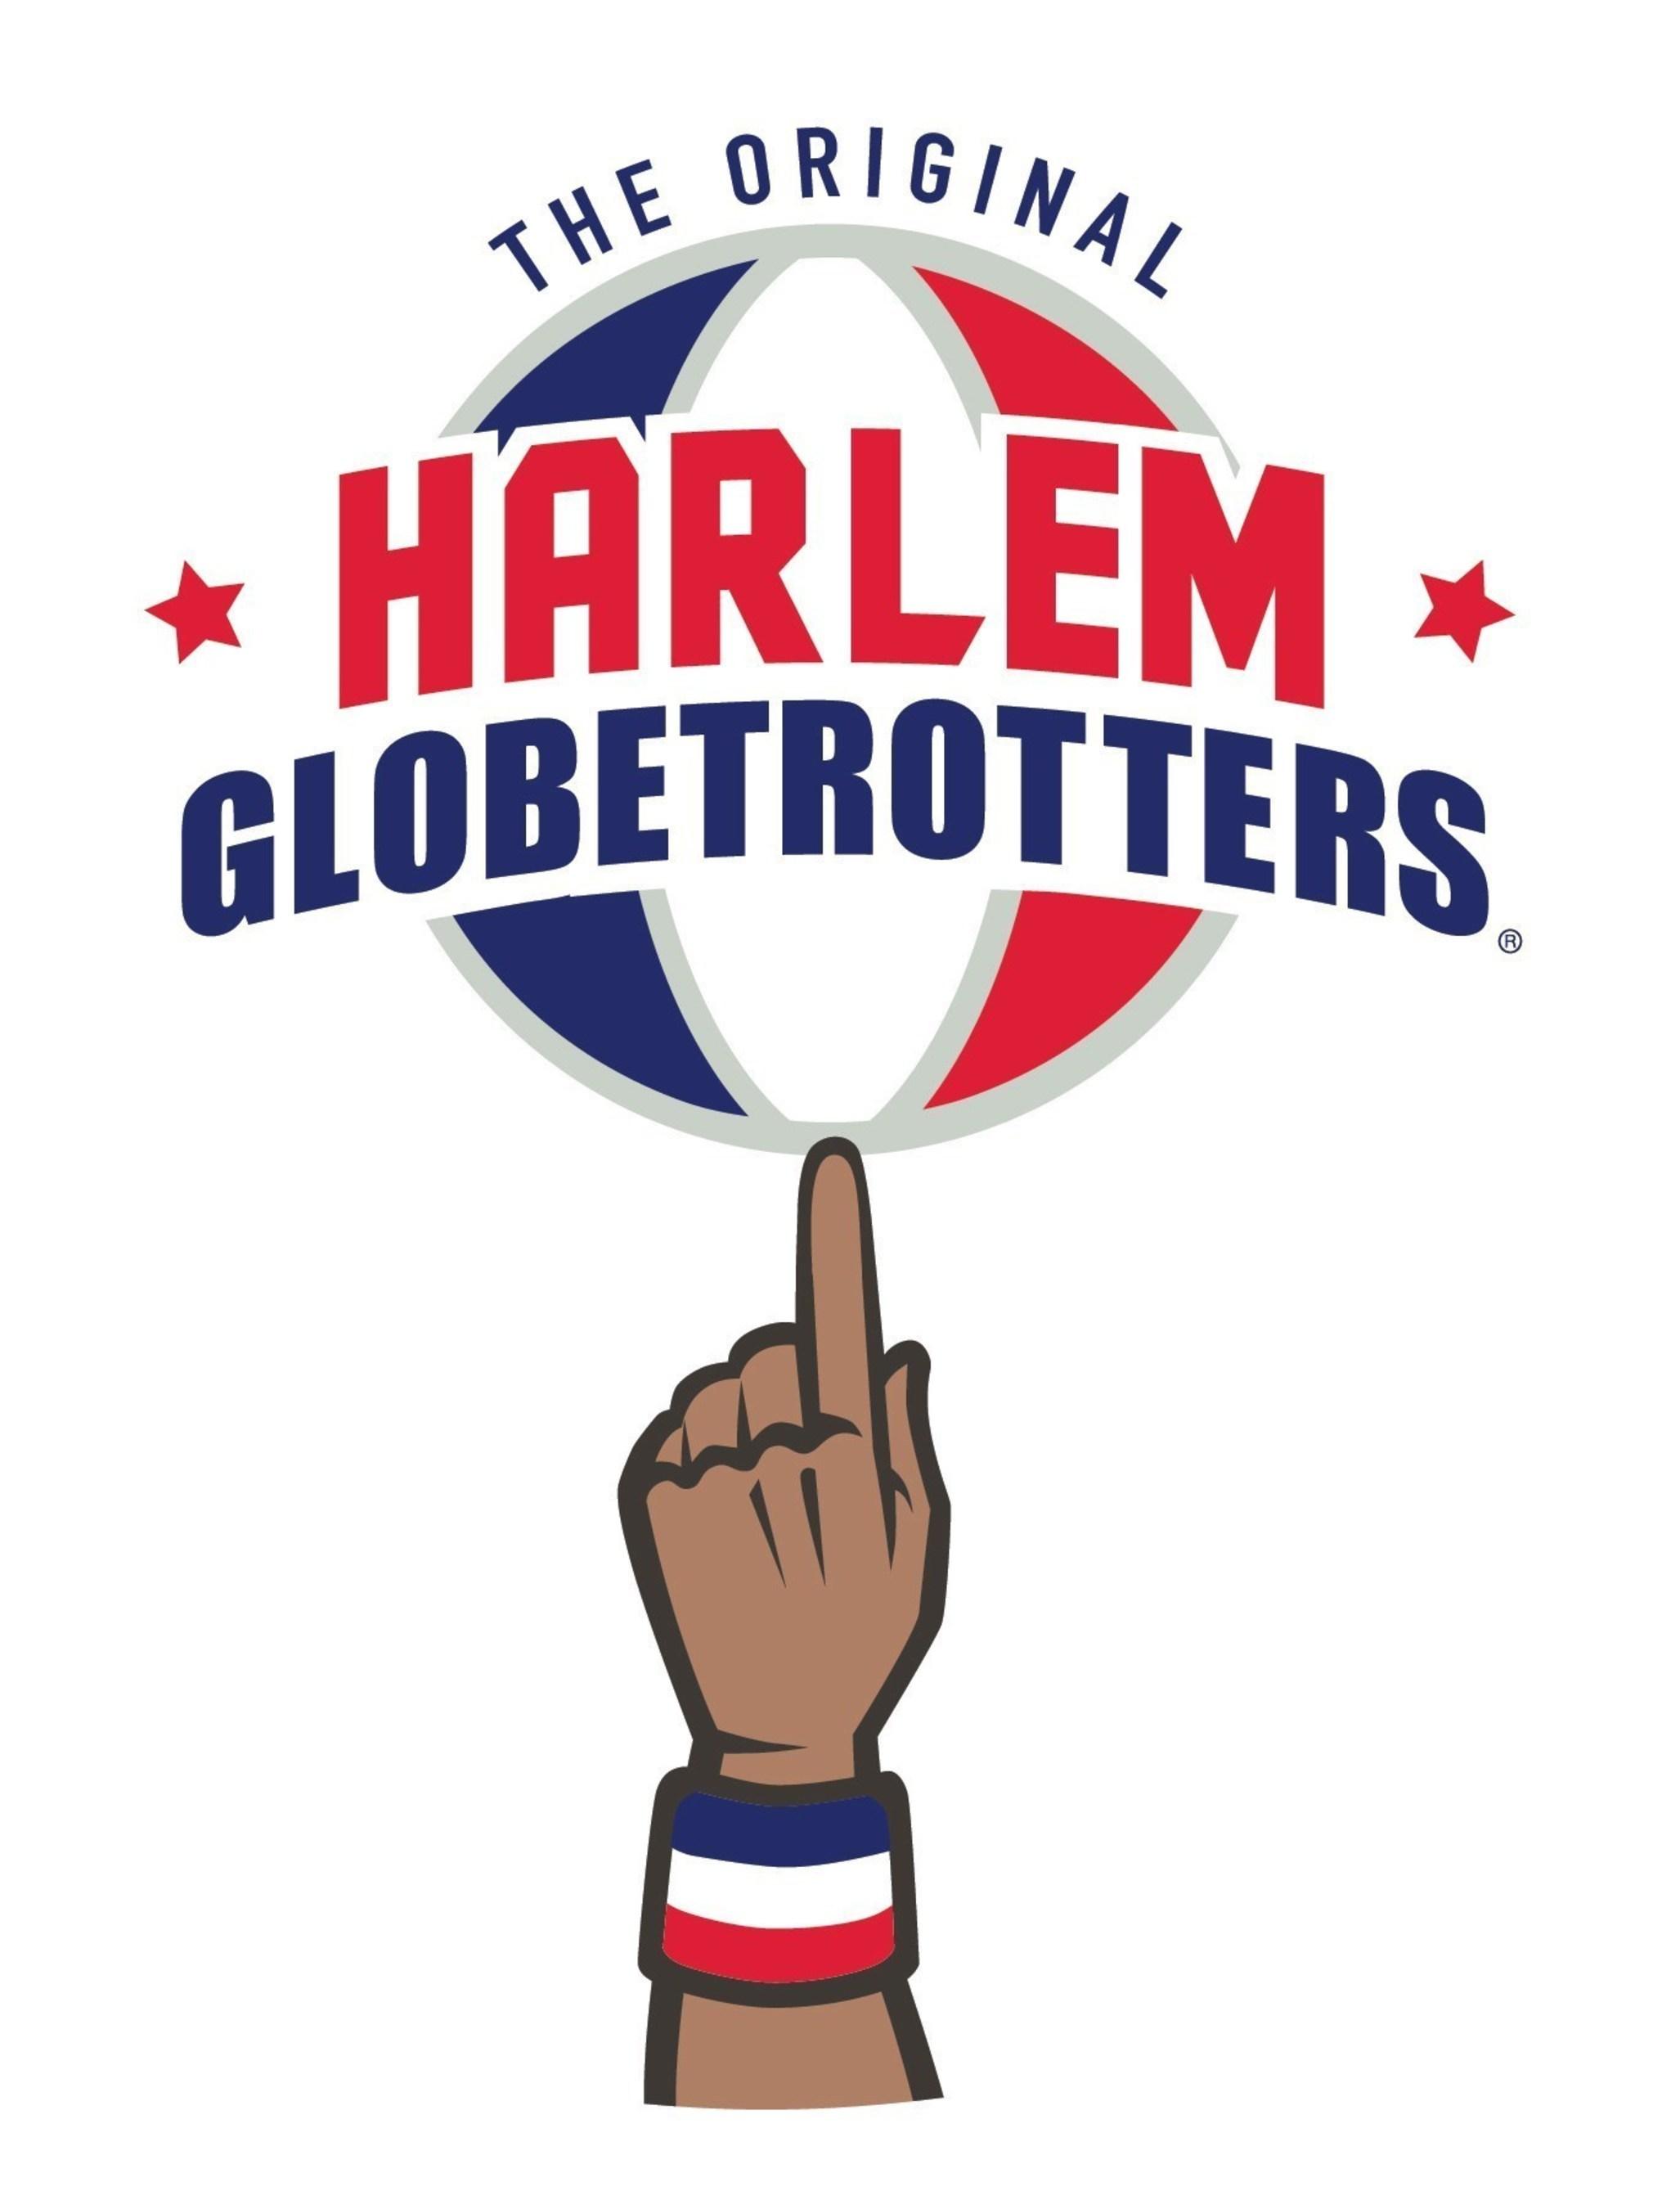 Harlem globetrotters Logos